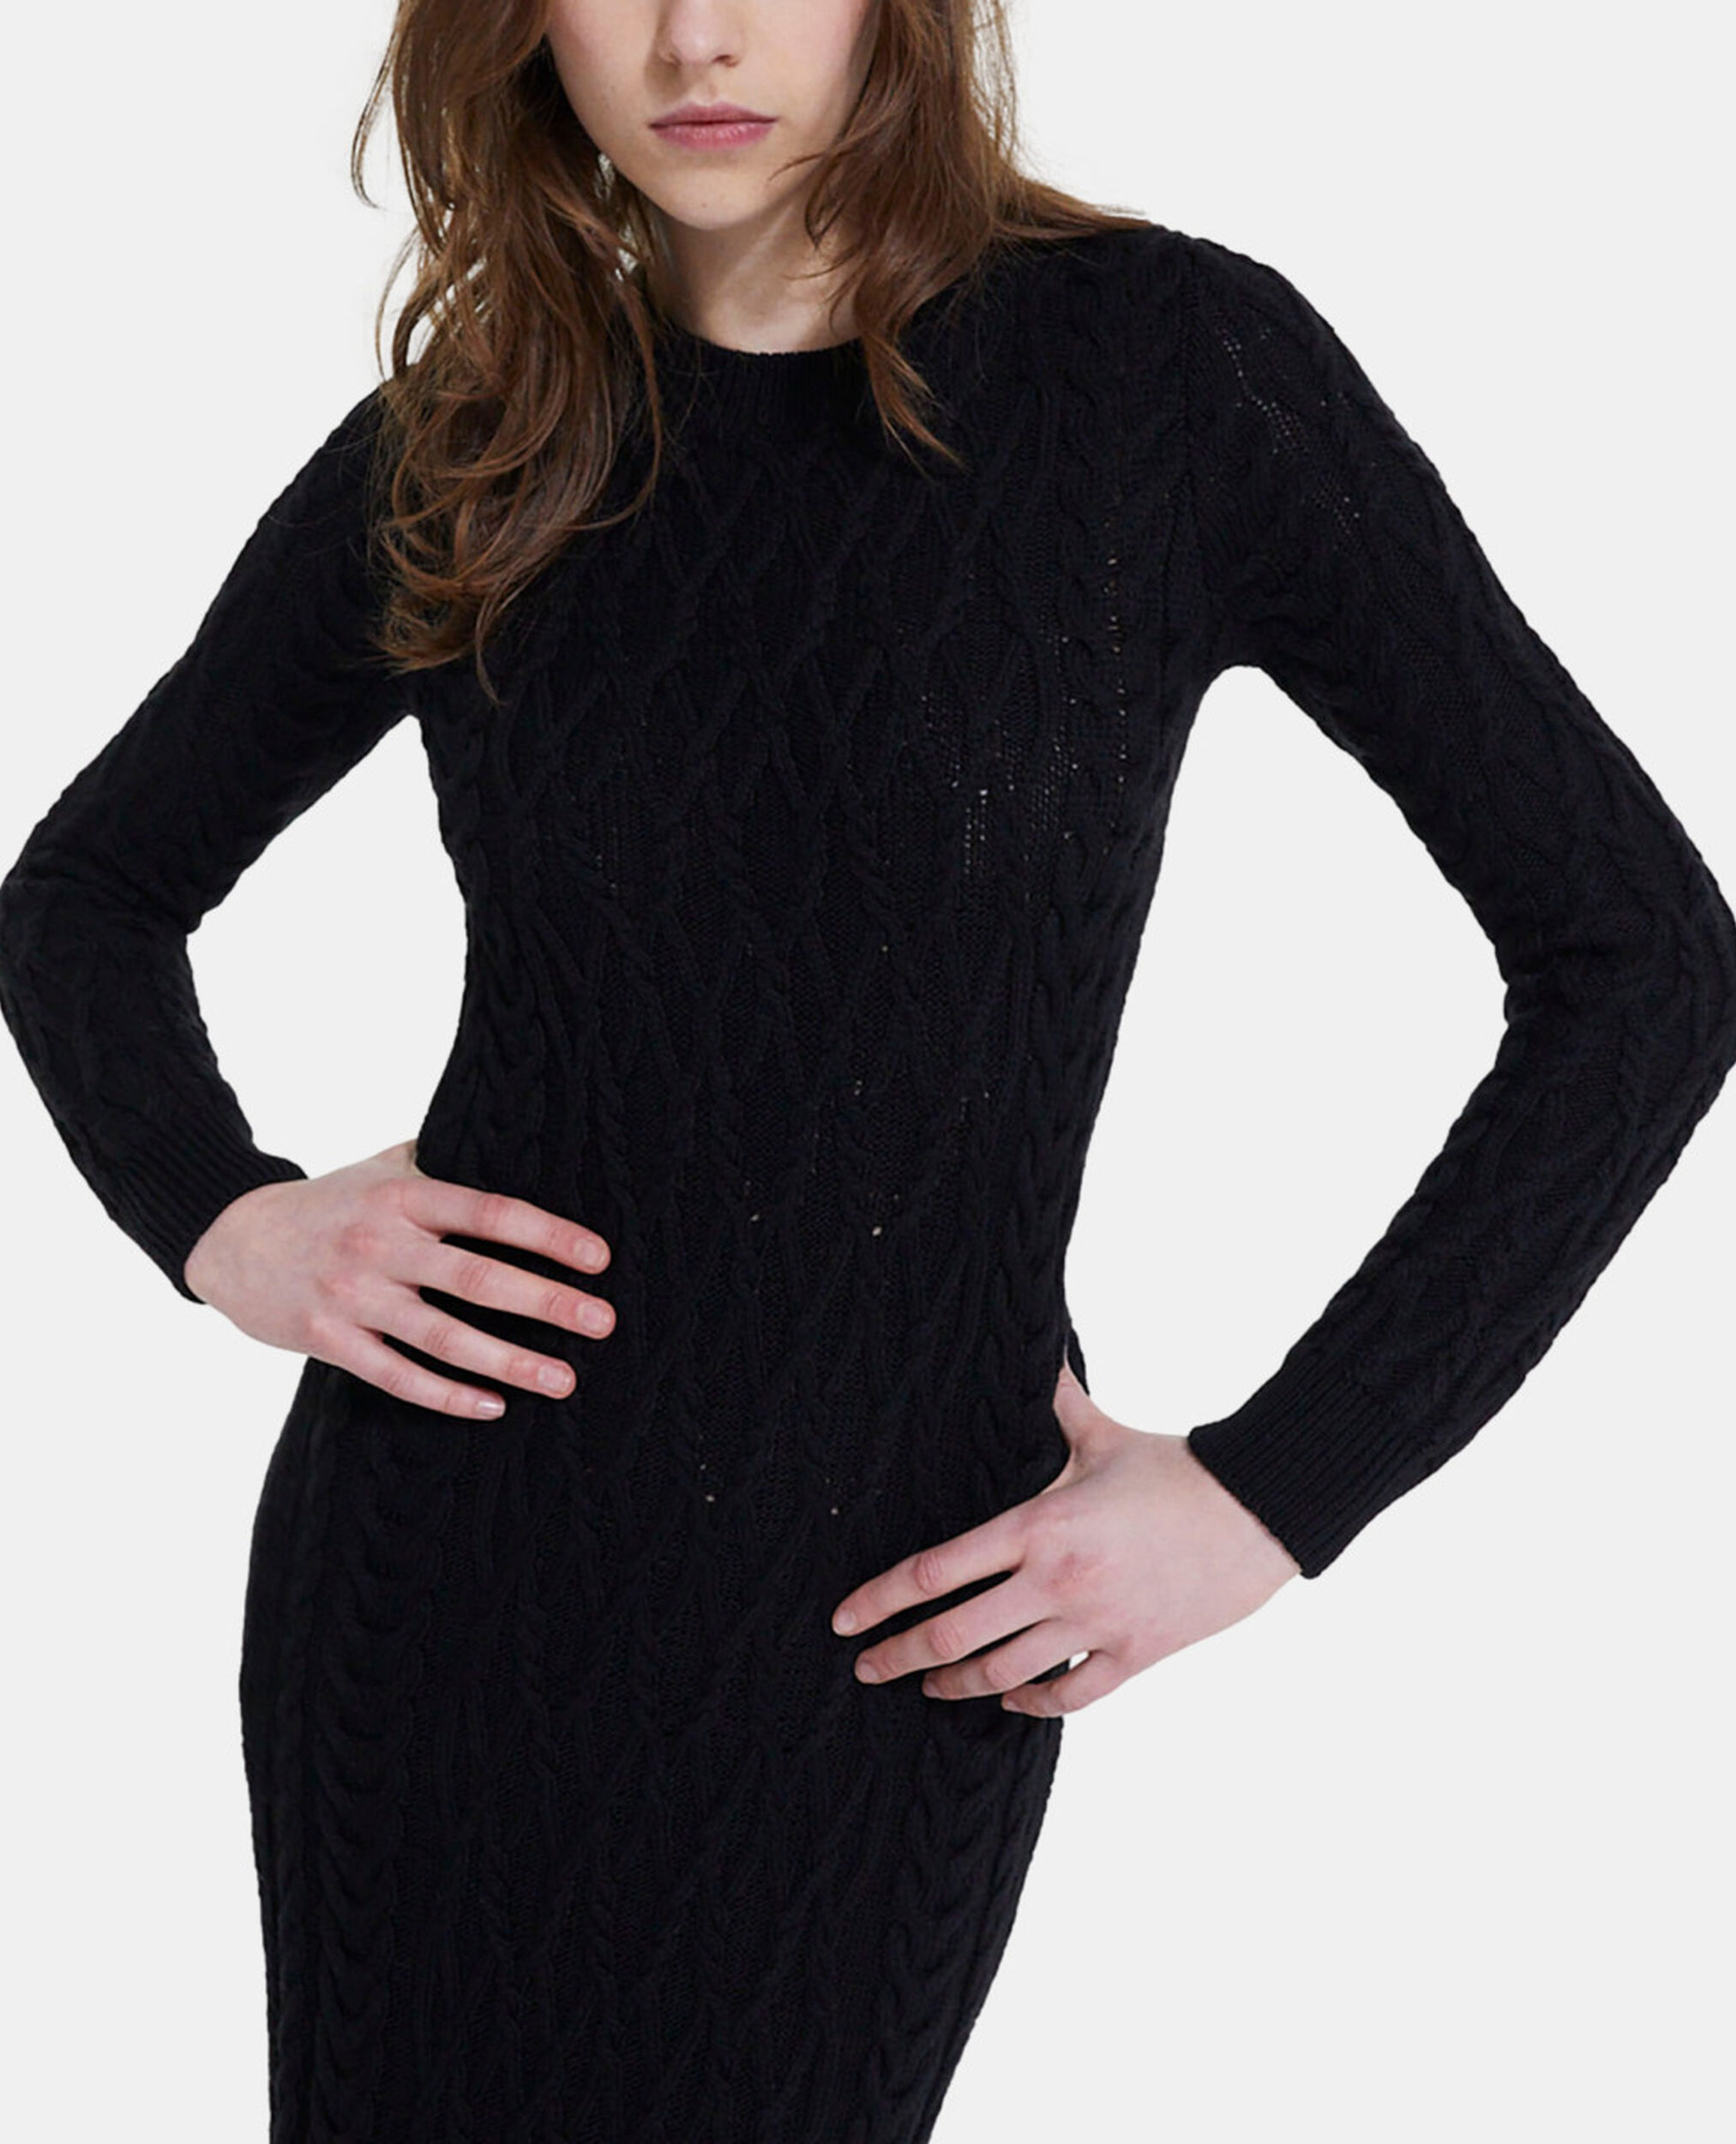 Long black wool dress, BLACK, hi-res image number null